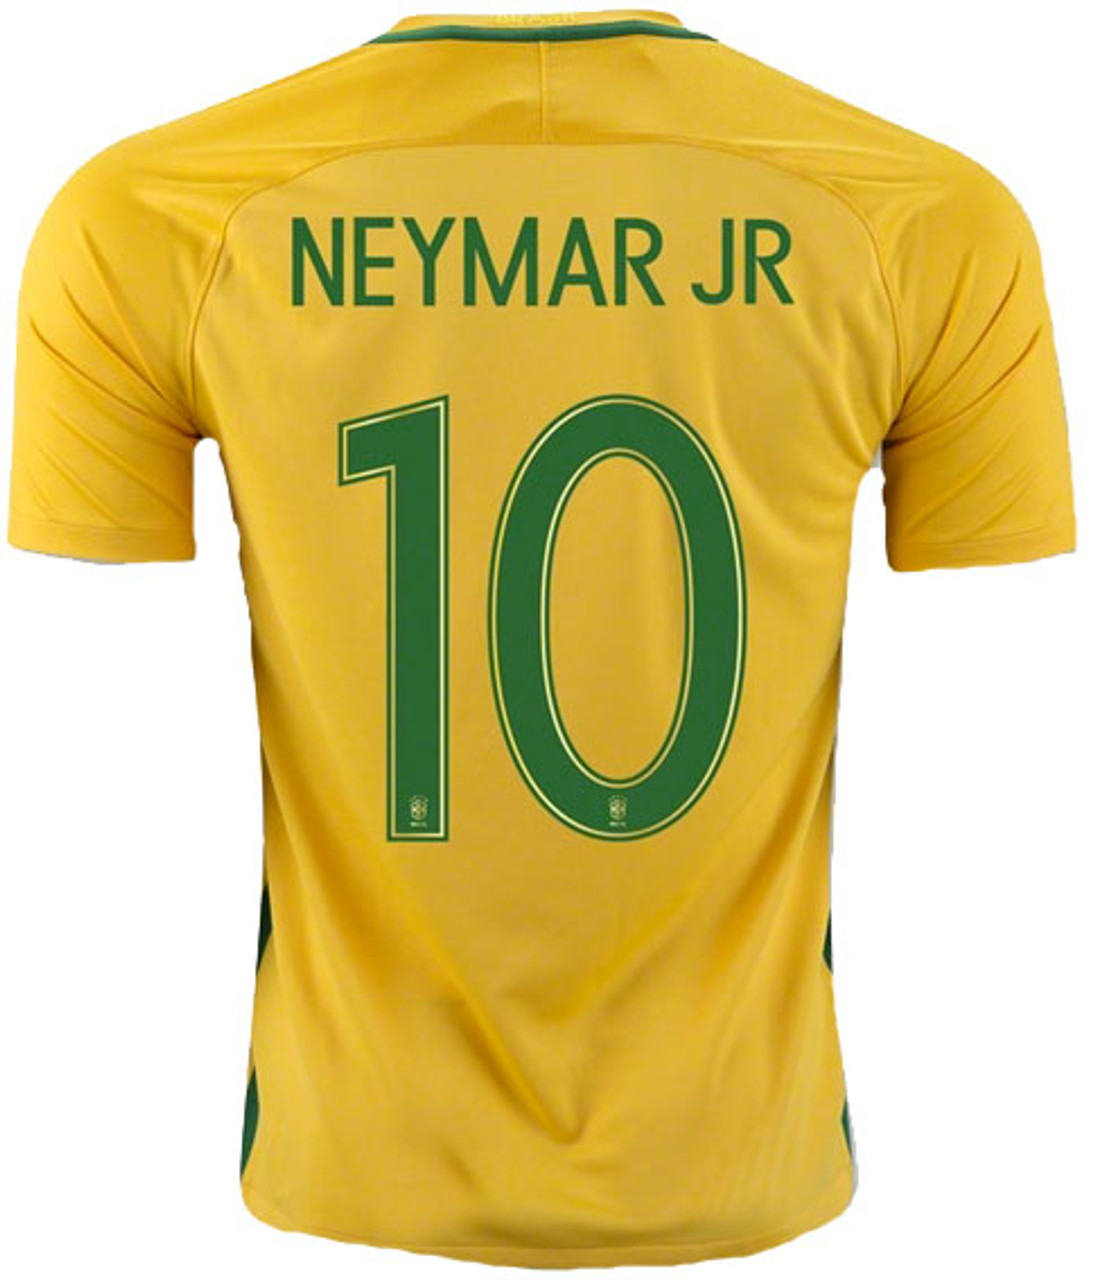 NIKE NEYMAR JR BRAZIL HOME JERSEY FIFA WORLD CUP 2014